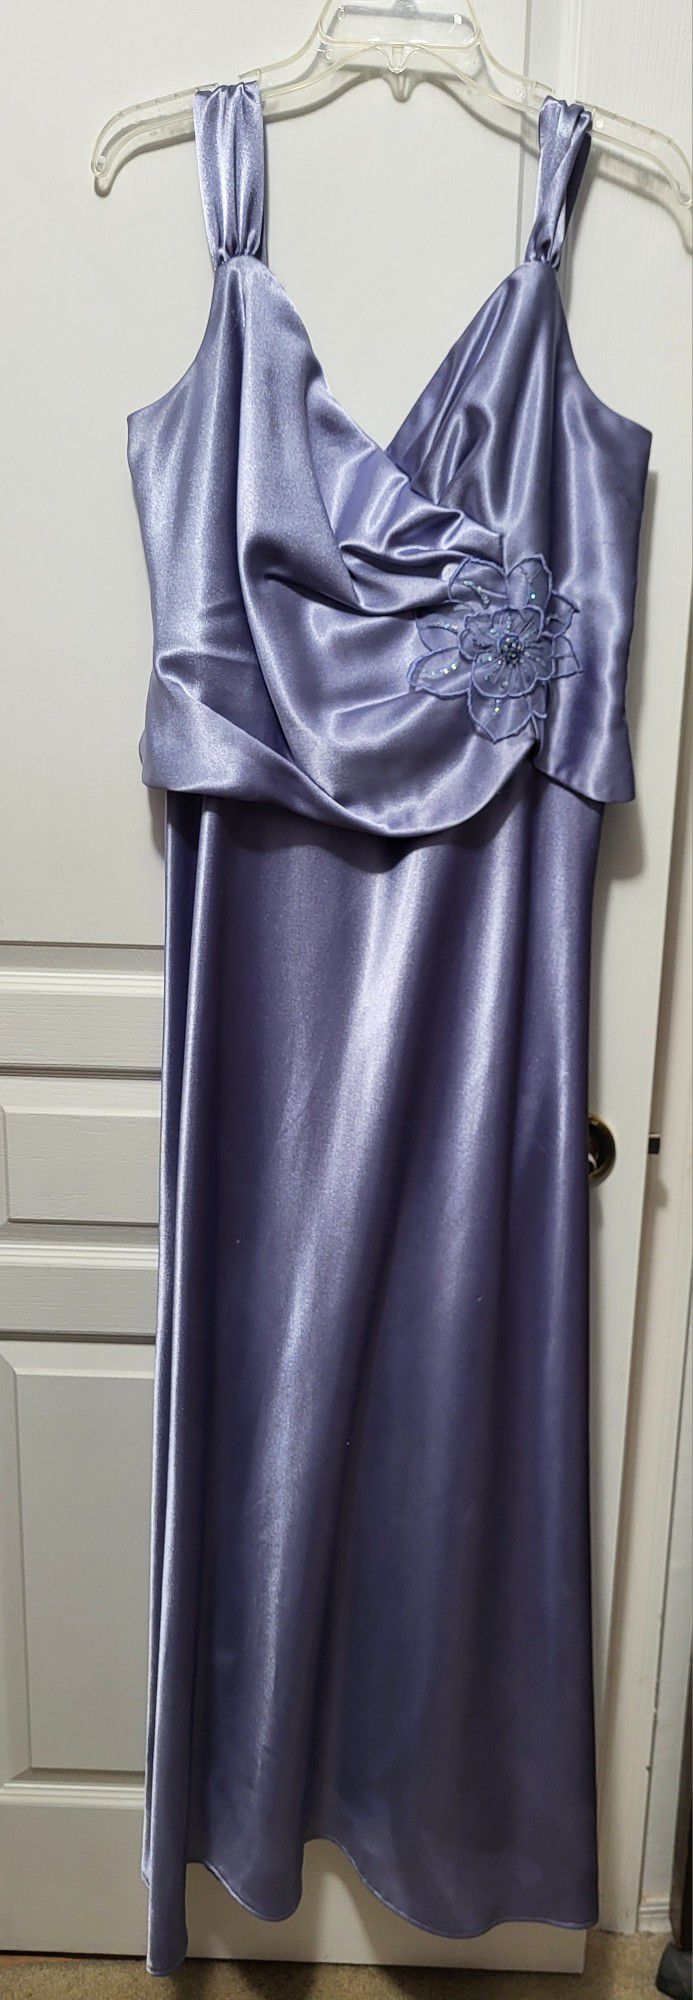 Prom Dress Size 14, Lavender